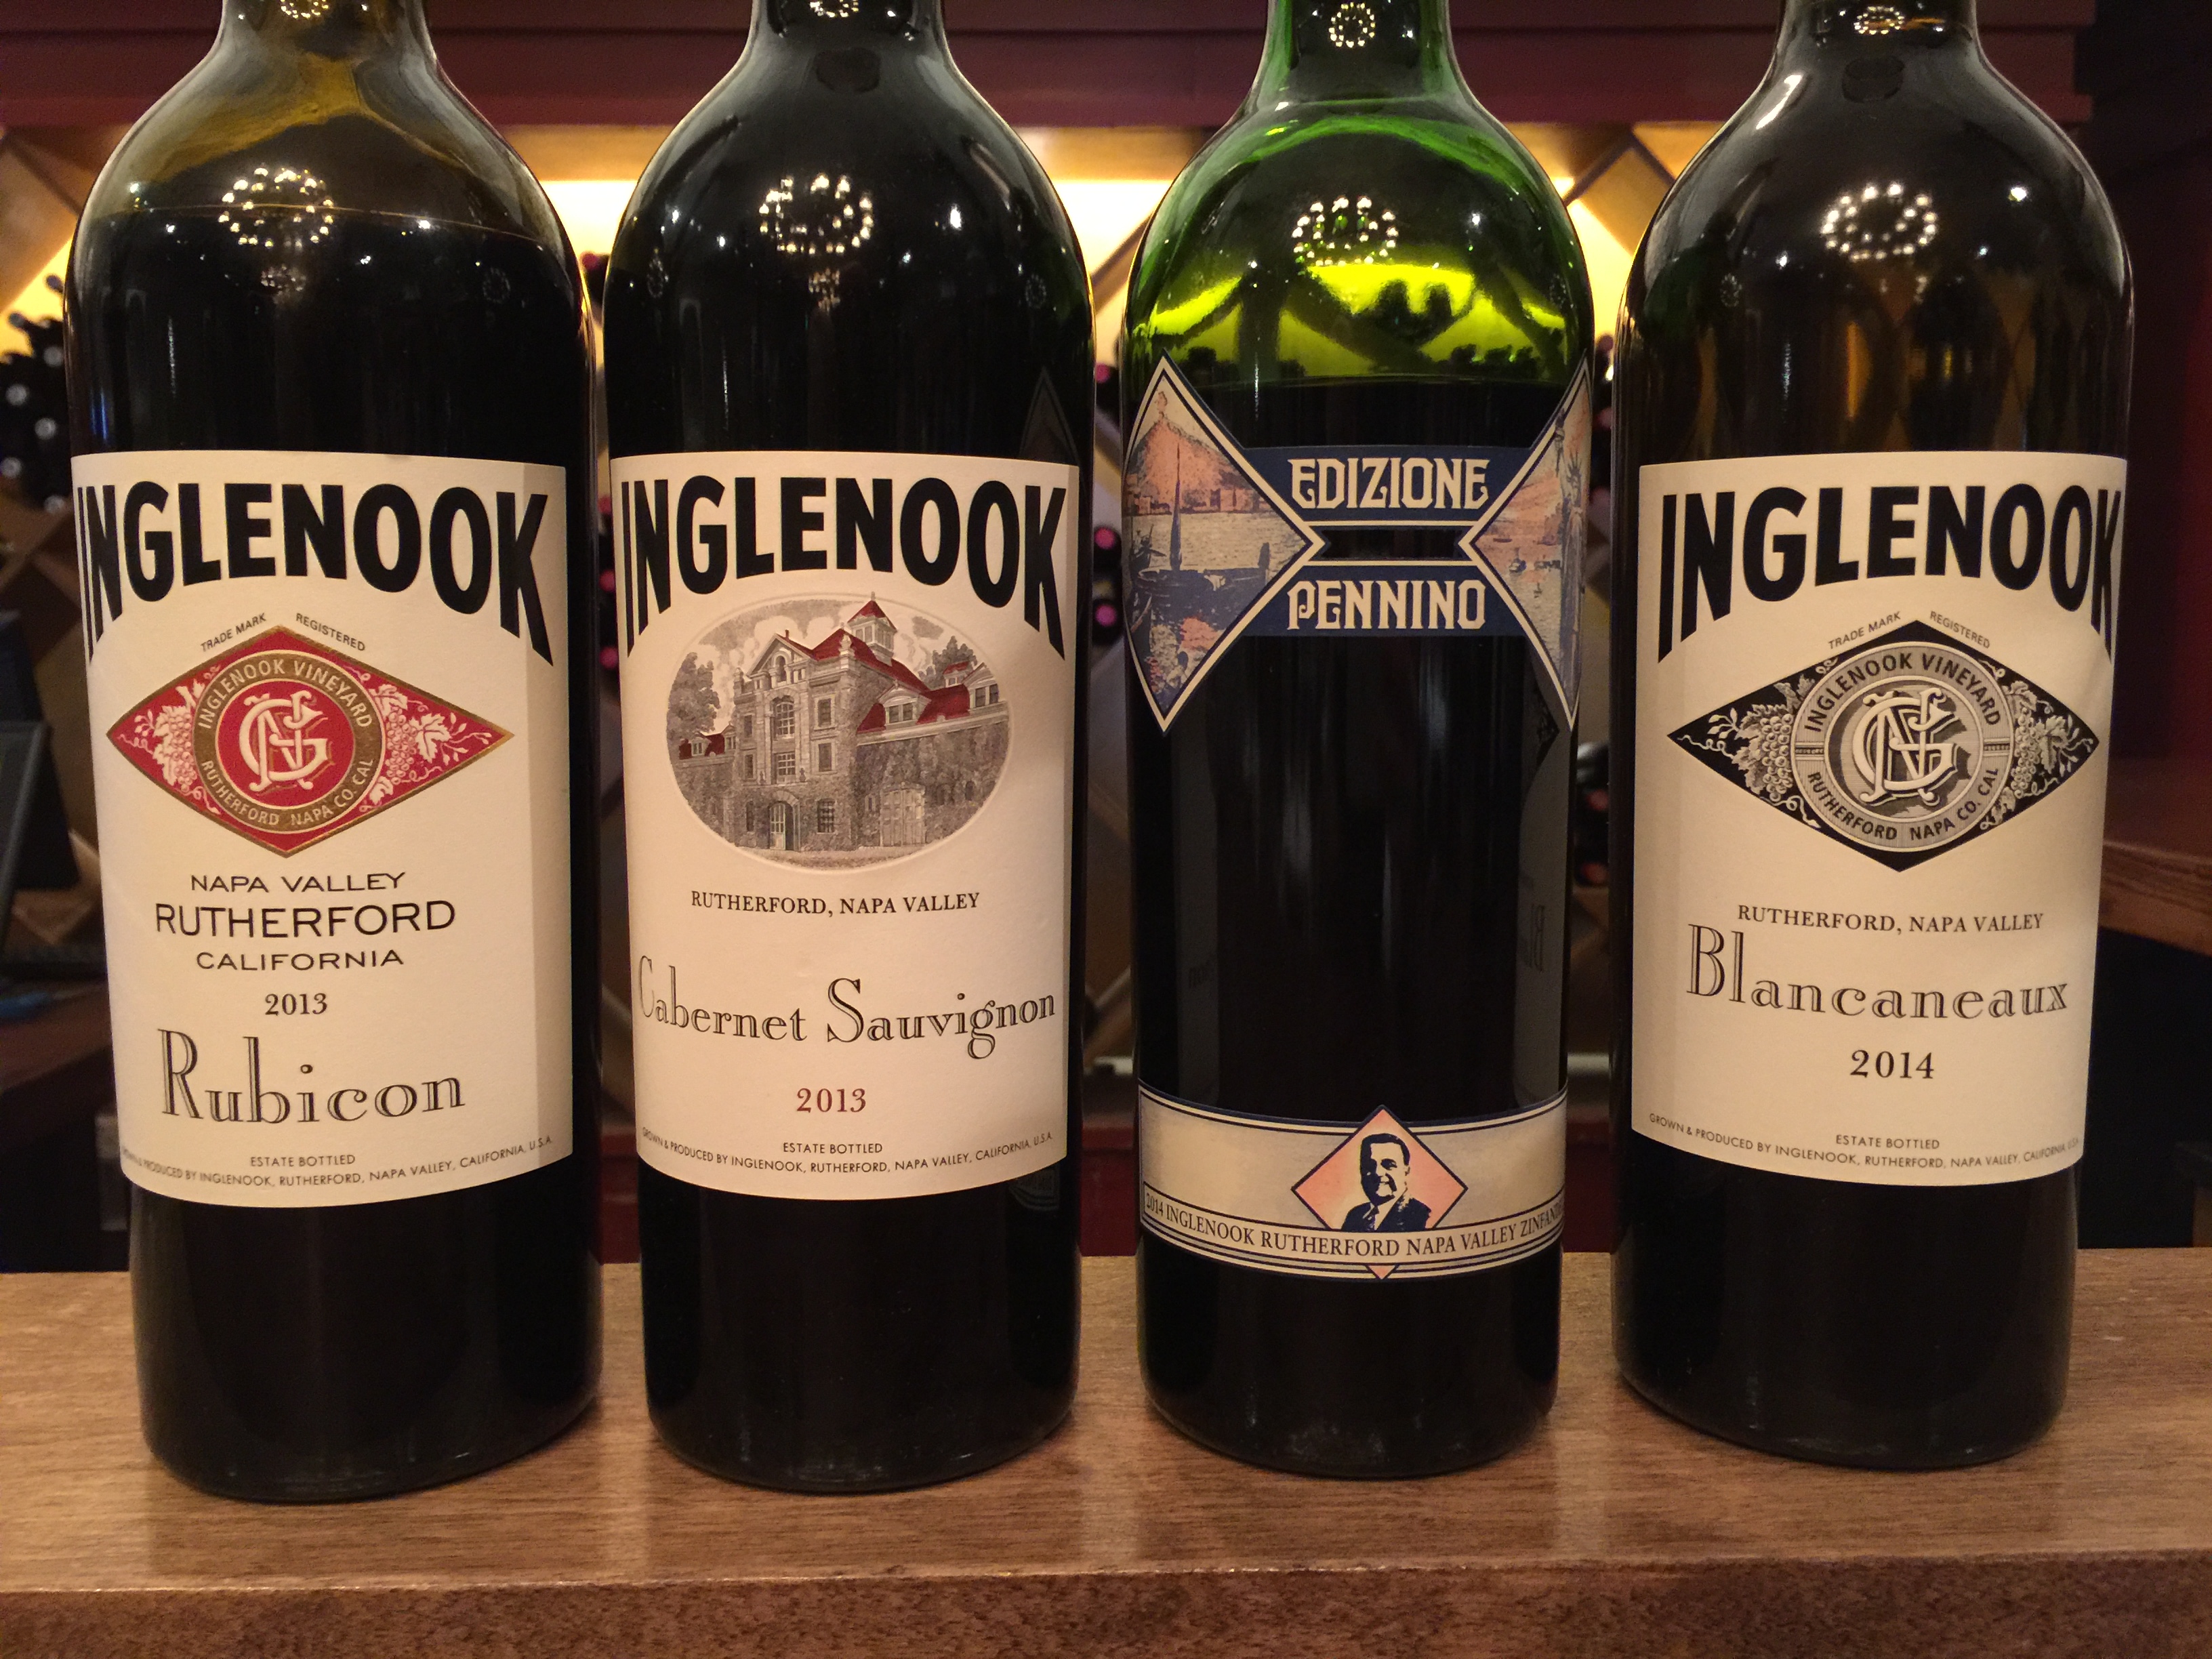 Inglenook wines